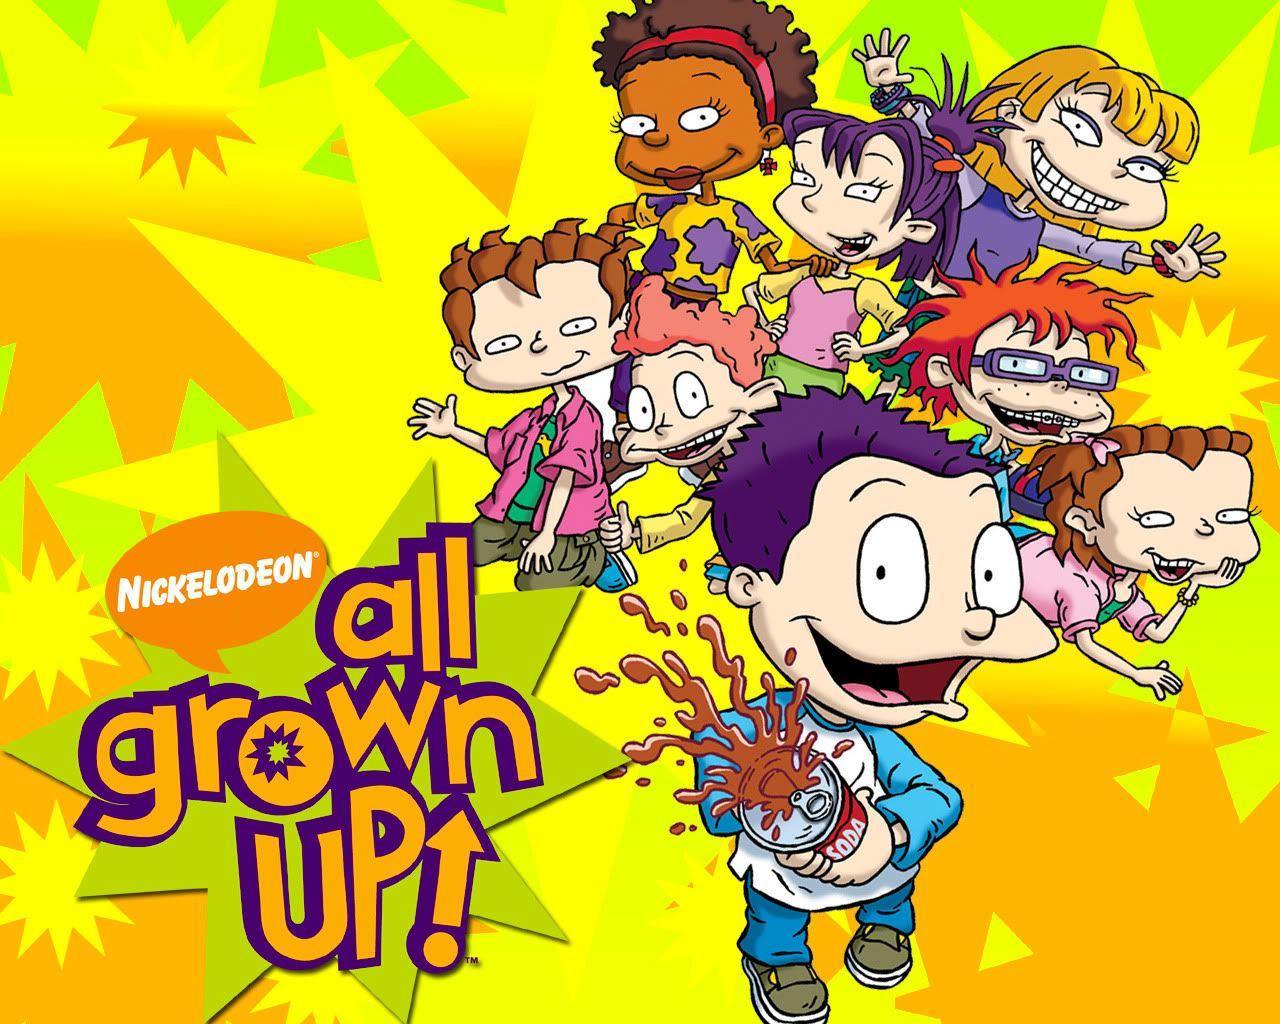 Nickelodeon Wallpaper